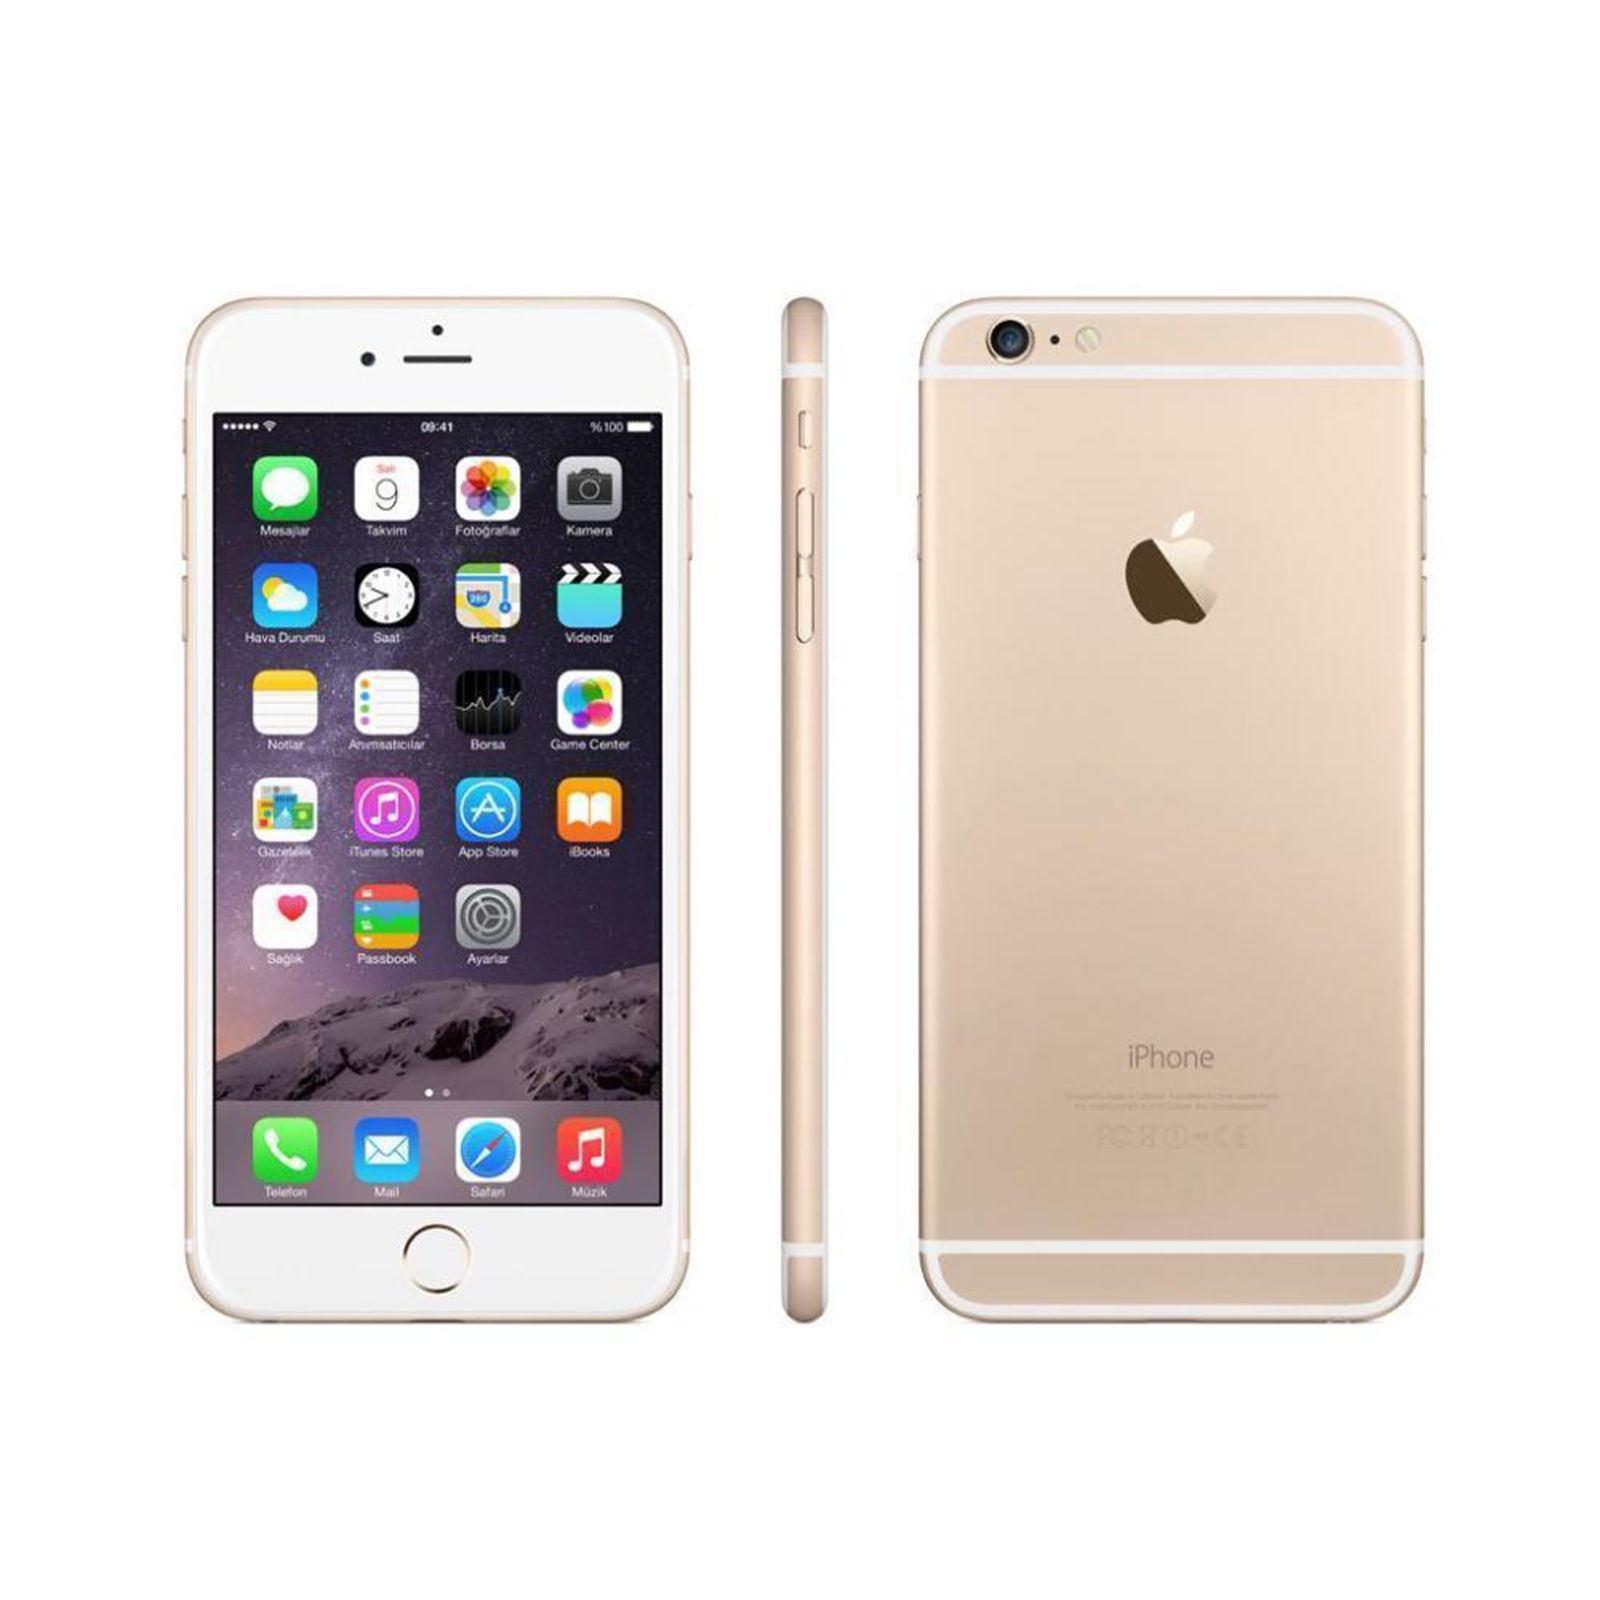 Apple iPhone 6 128GB GSM Smartphone - Gold